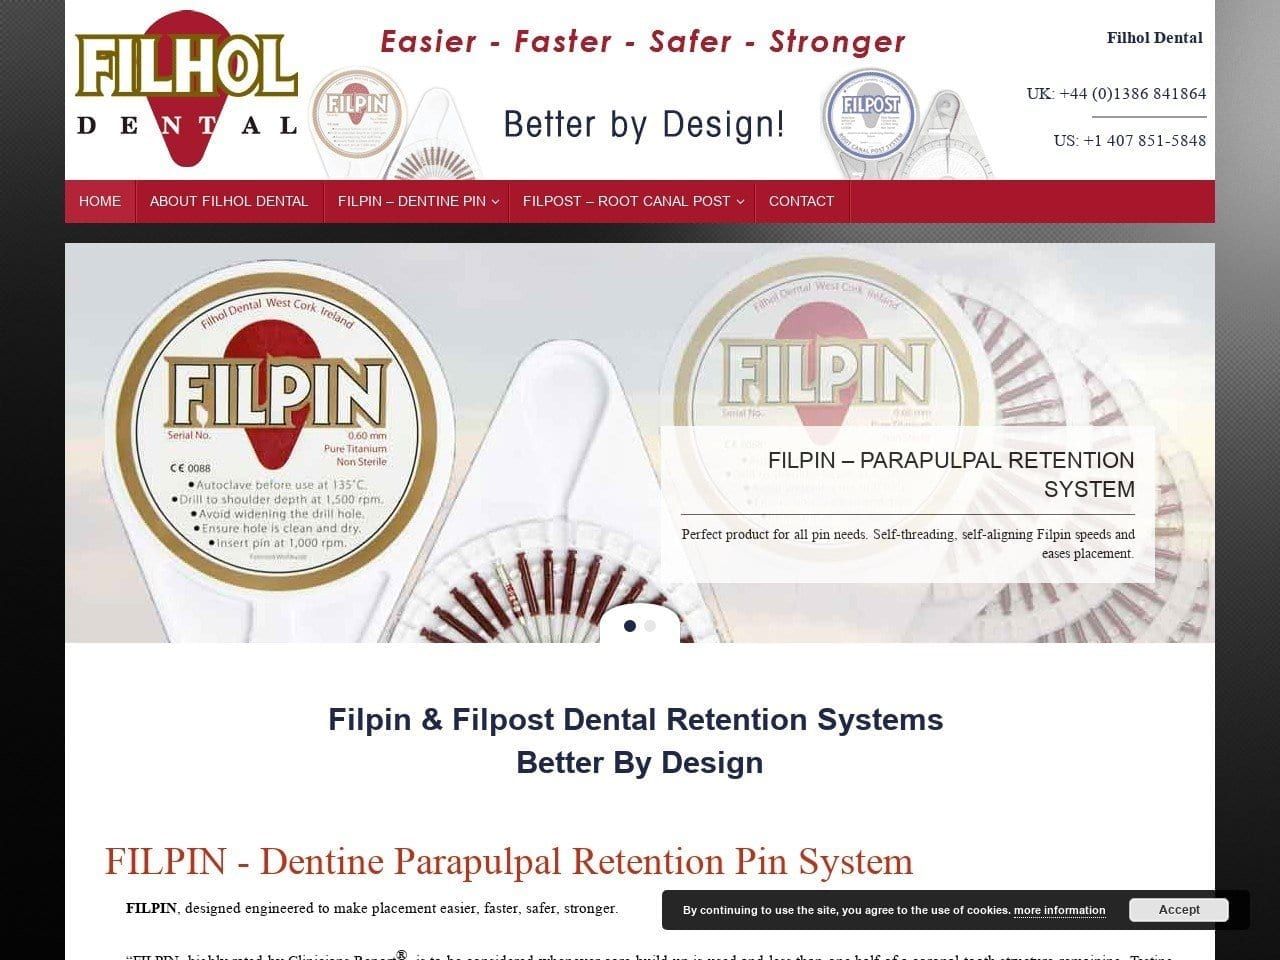 Filhol Dental Website Screenshot from filhol.com